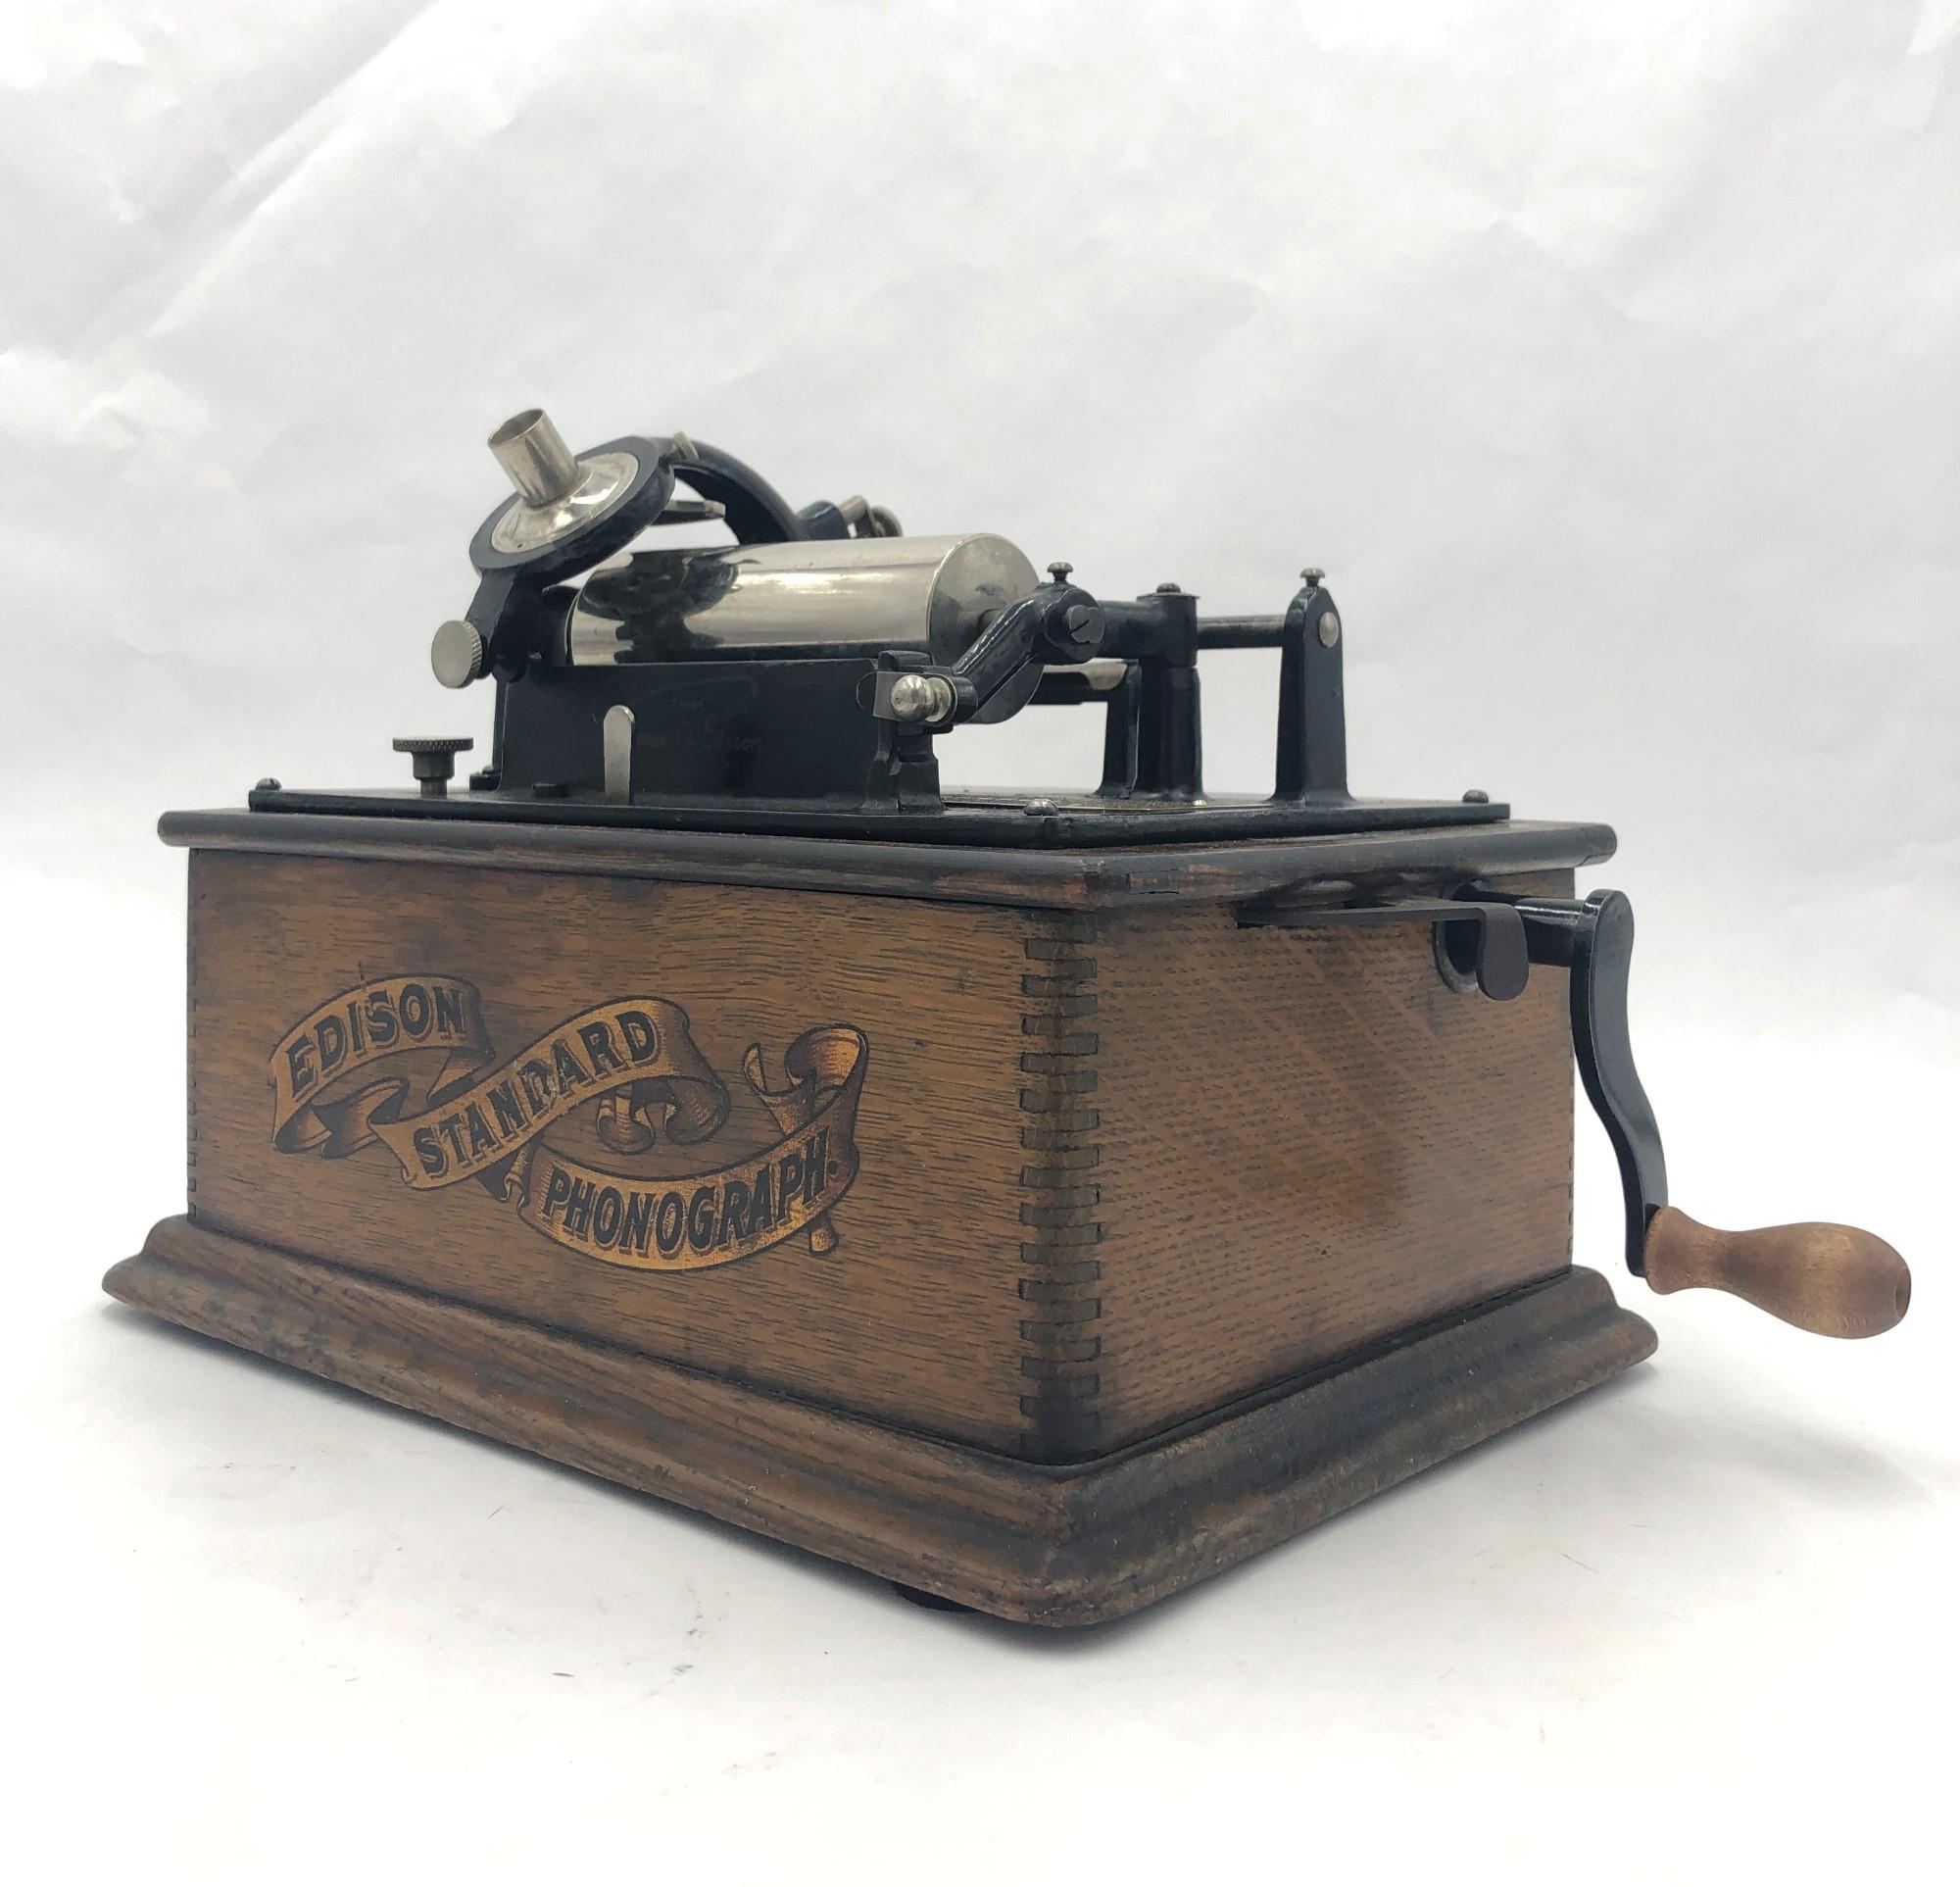 Working 1903 Edison Standard Cylinder Phonograph Manual Hand Crank 4